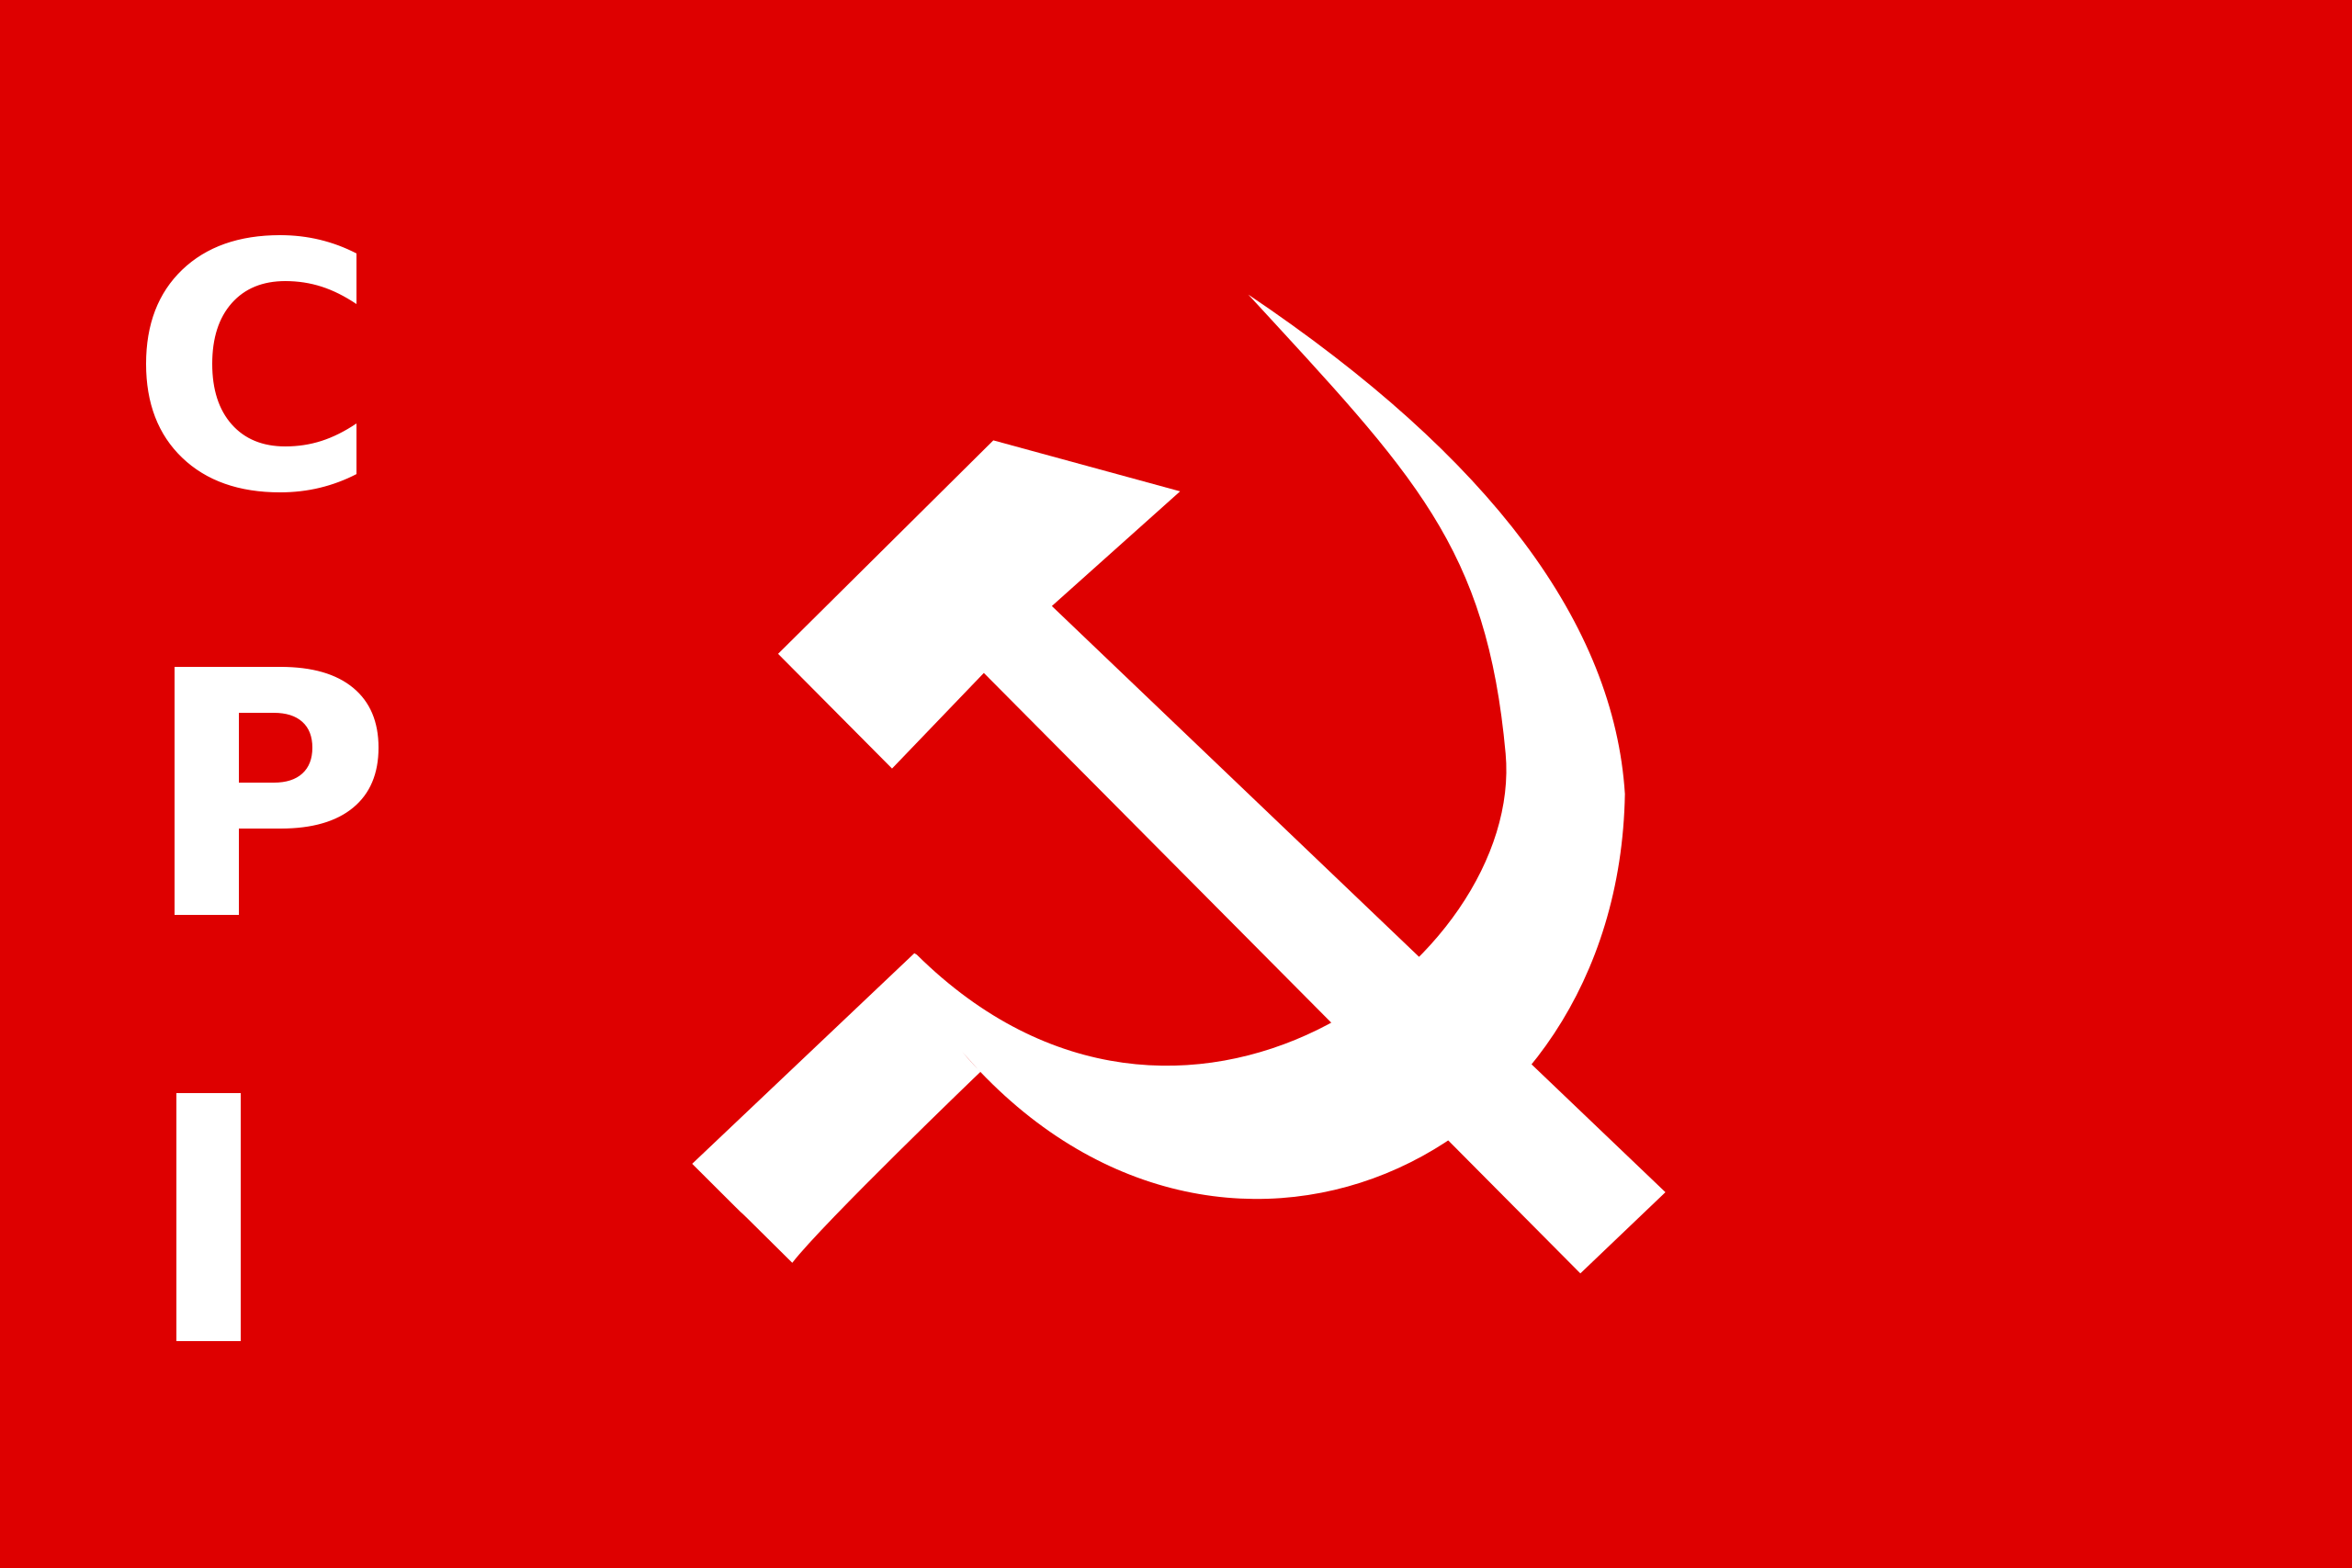 File:CPI flag.png